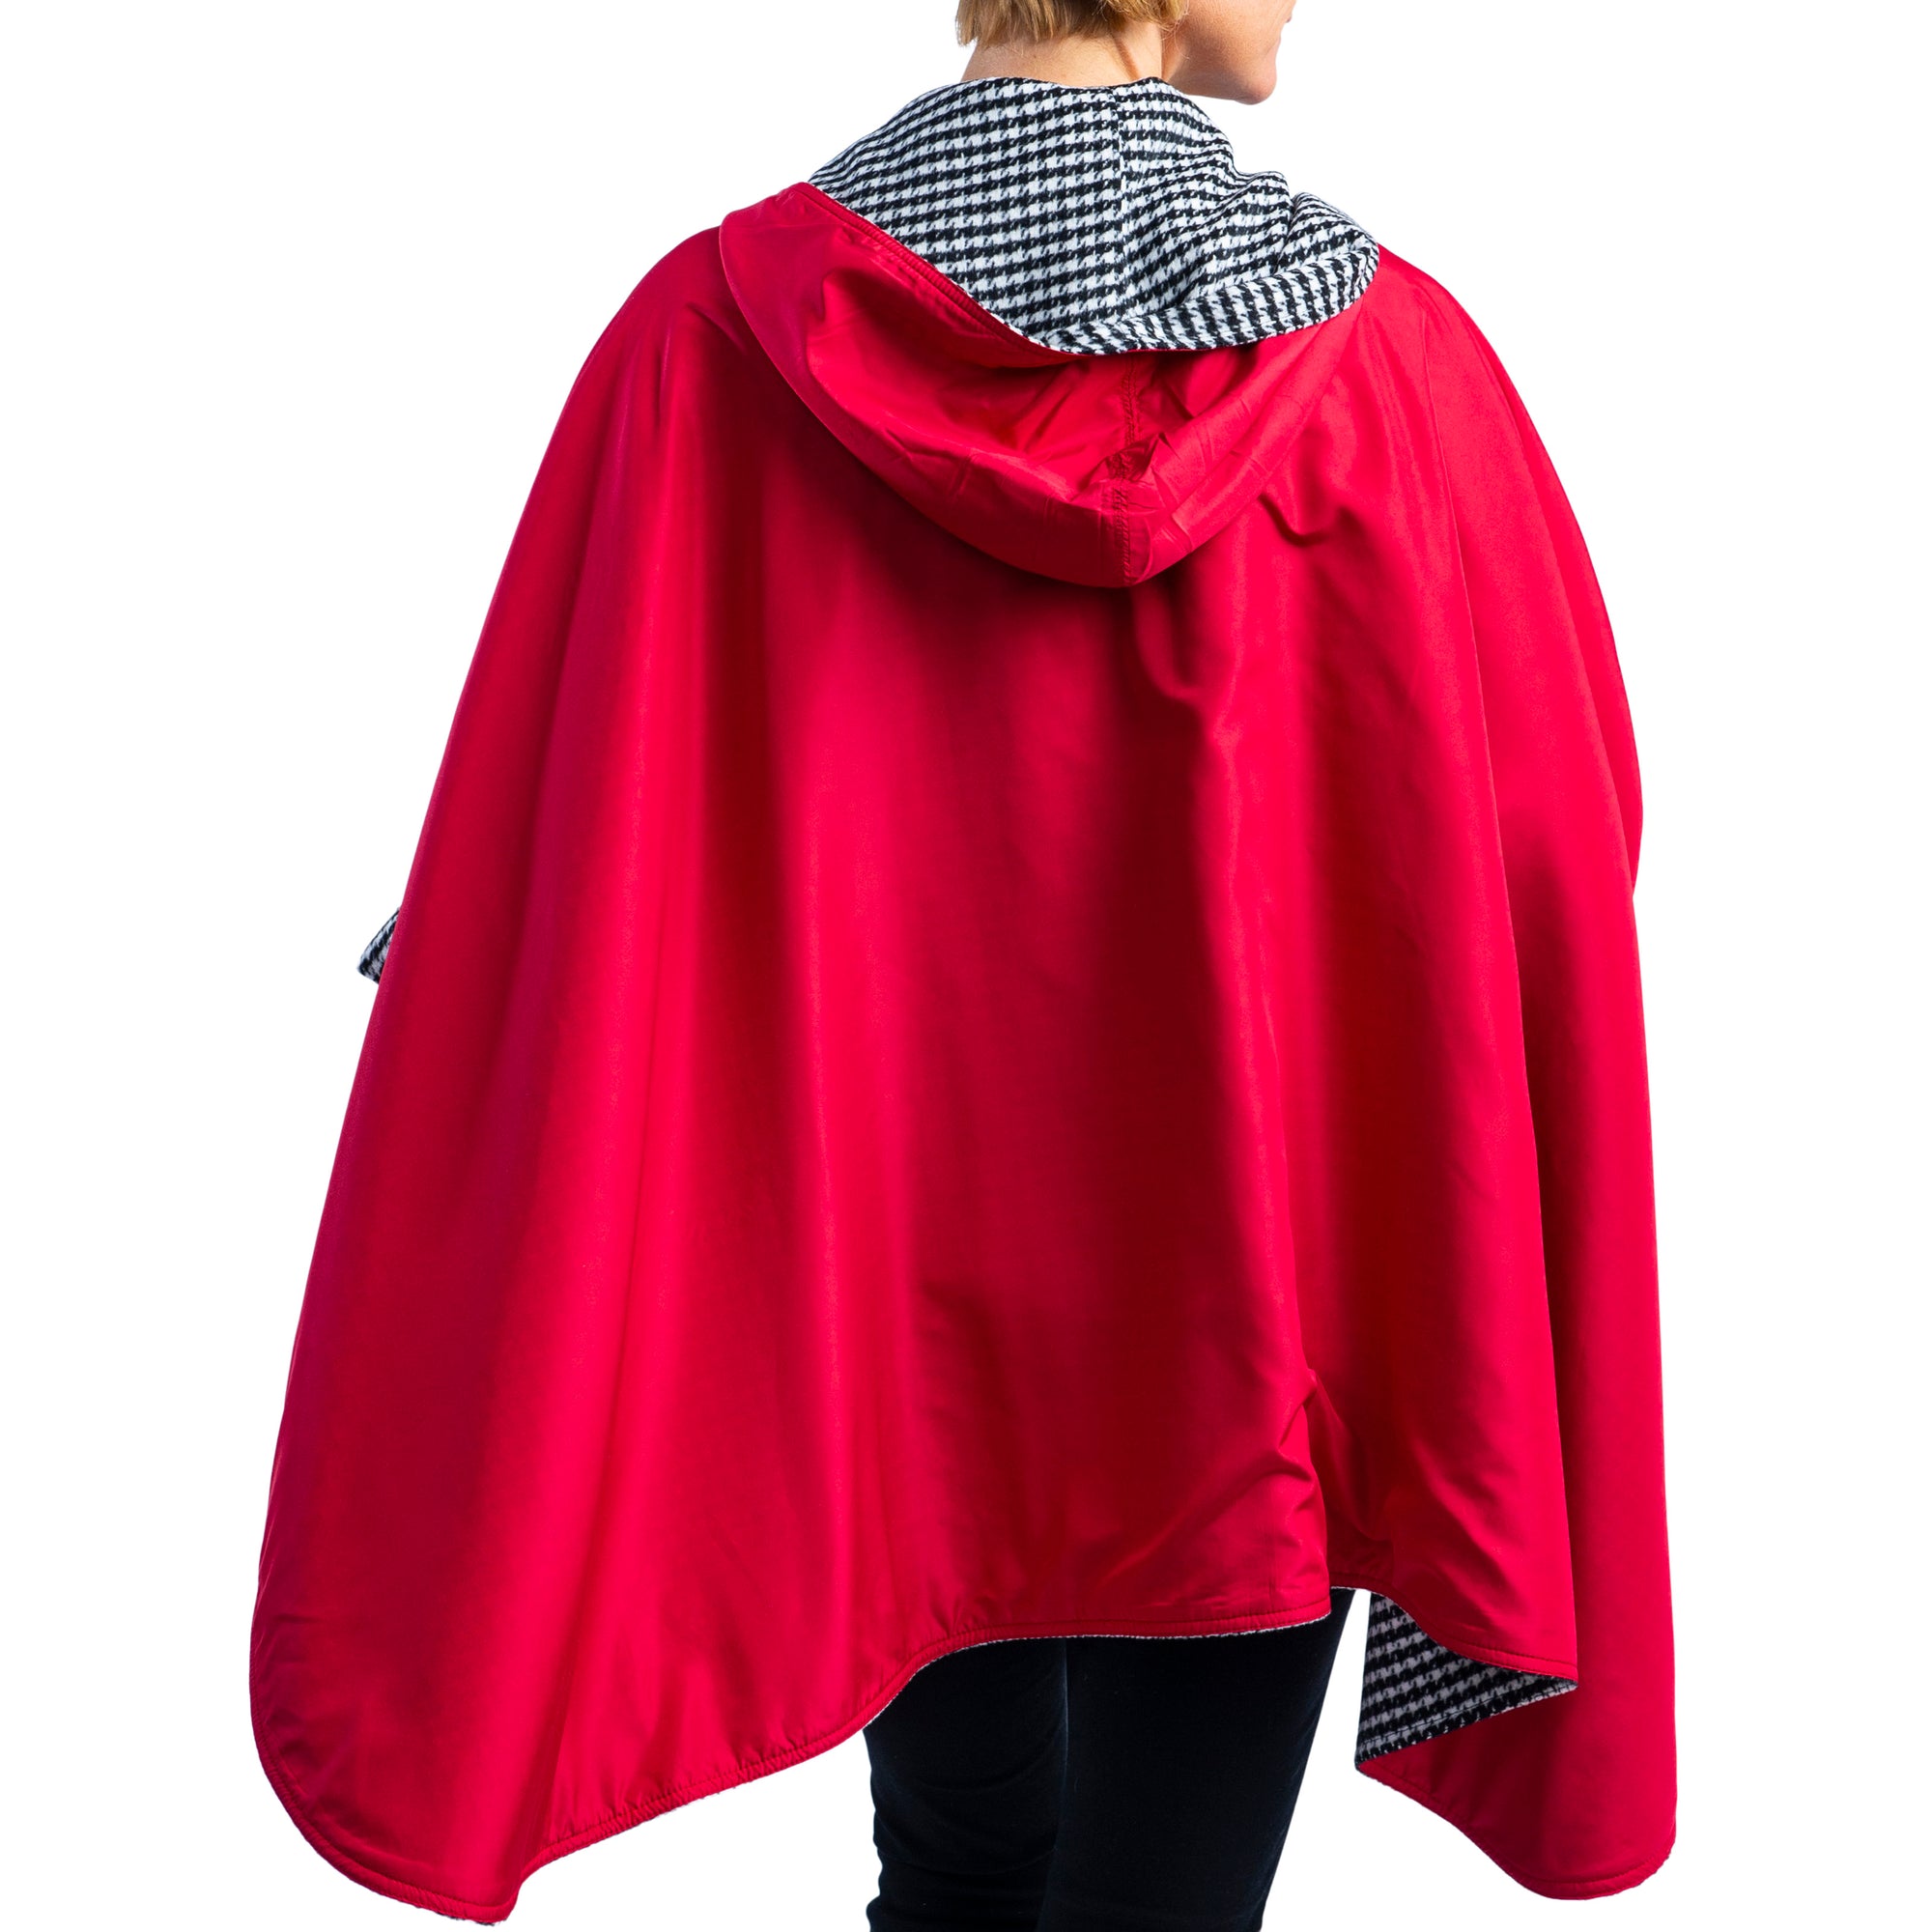 Woman wearing a WarmCaper Warm Houndstooth/Crimson Rainproof and travel cape by RainCaper